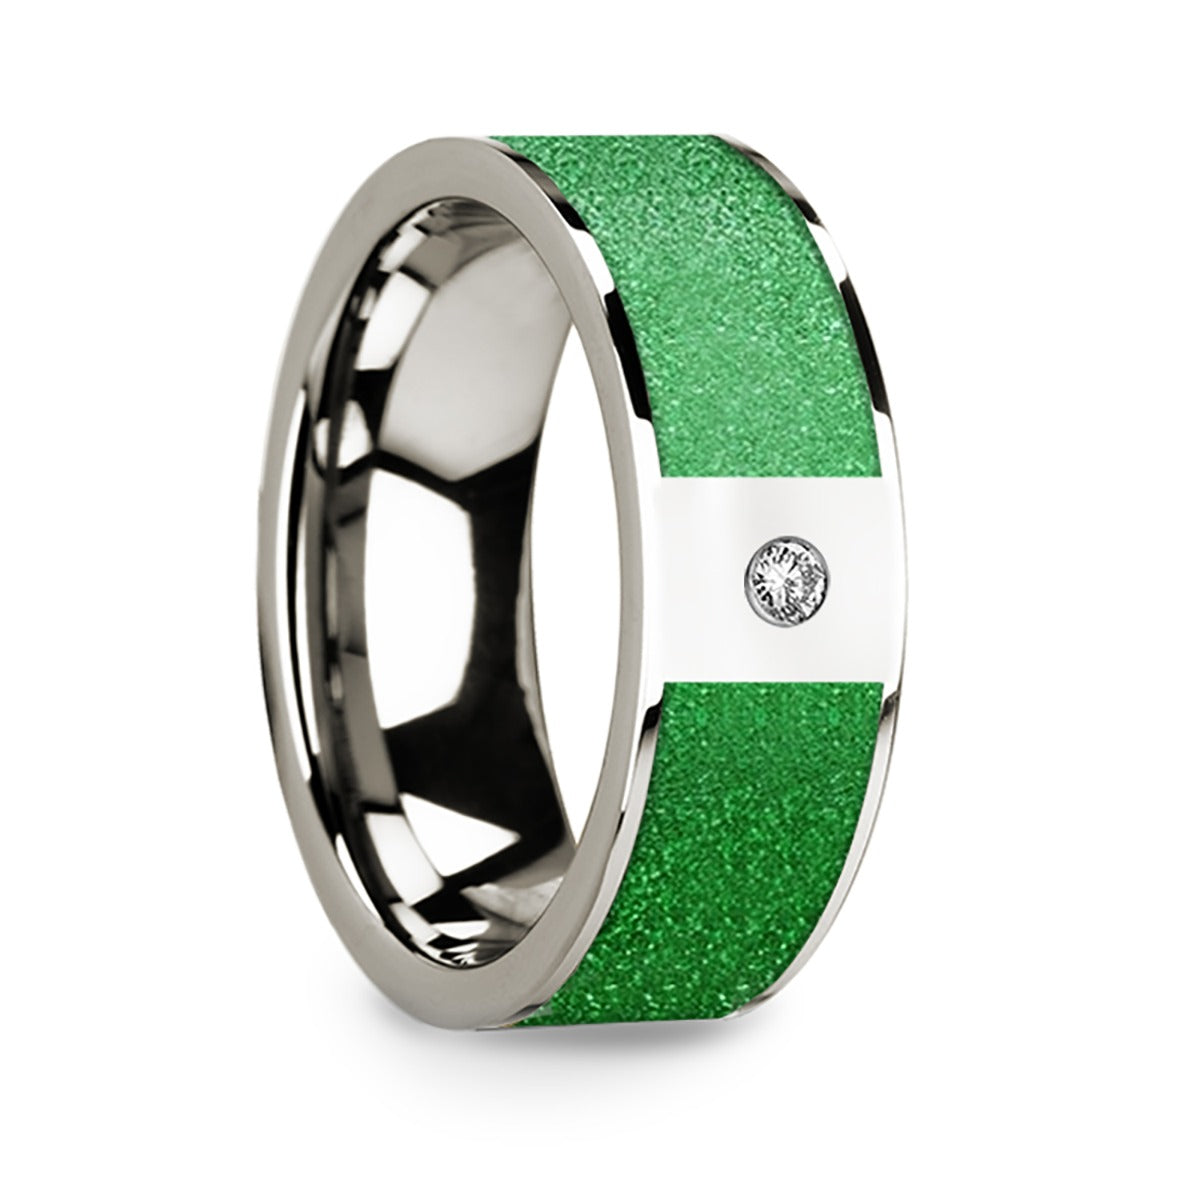 14k White Gold Men's Wedding Band with Textured Green Inlay & Diamond